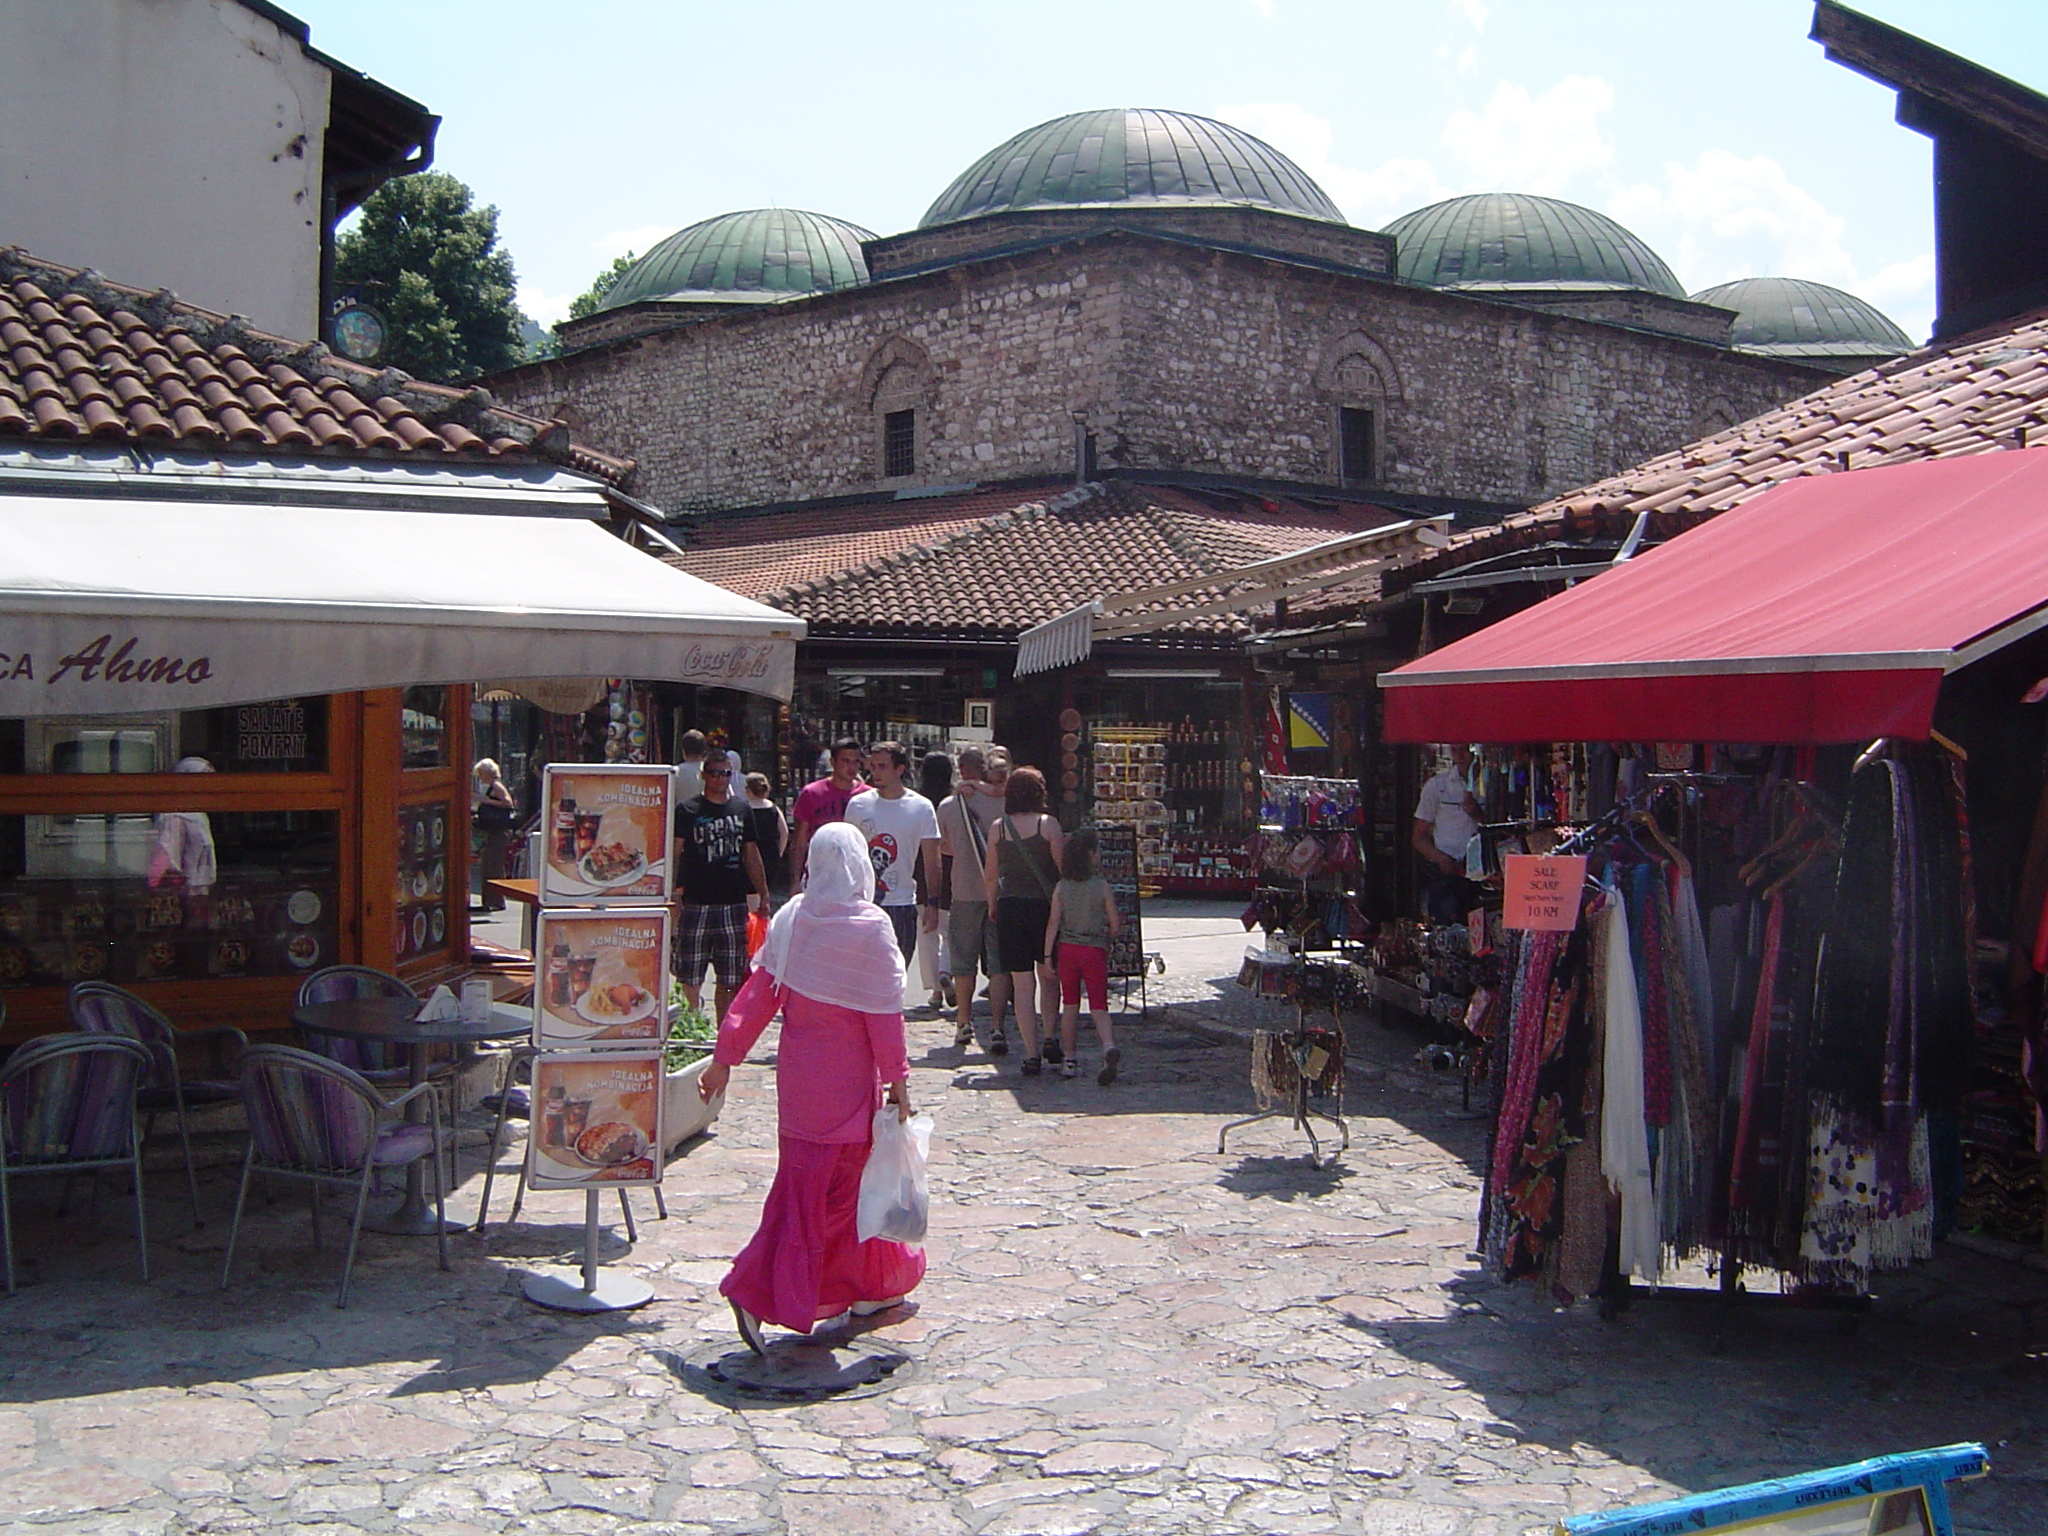 stolica Sarajewo - Bośnia i Hercegowina